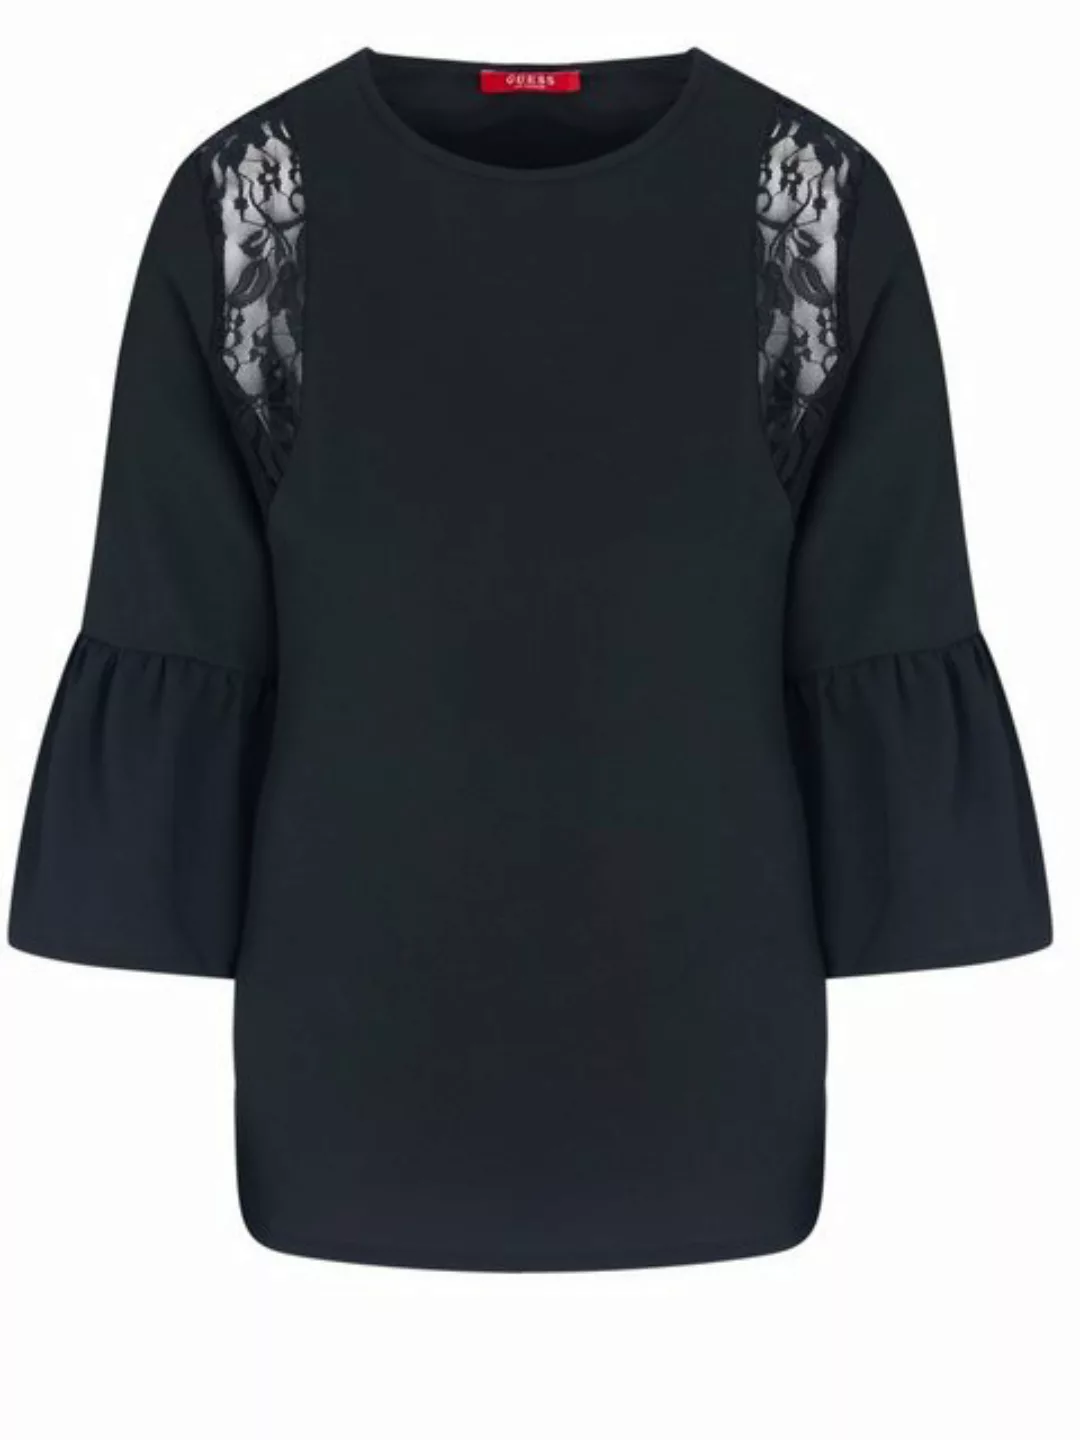 Guess Langarmbluse GUESS Bluse schwarz günstig online kaufen